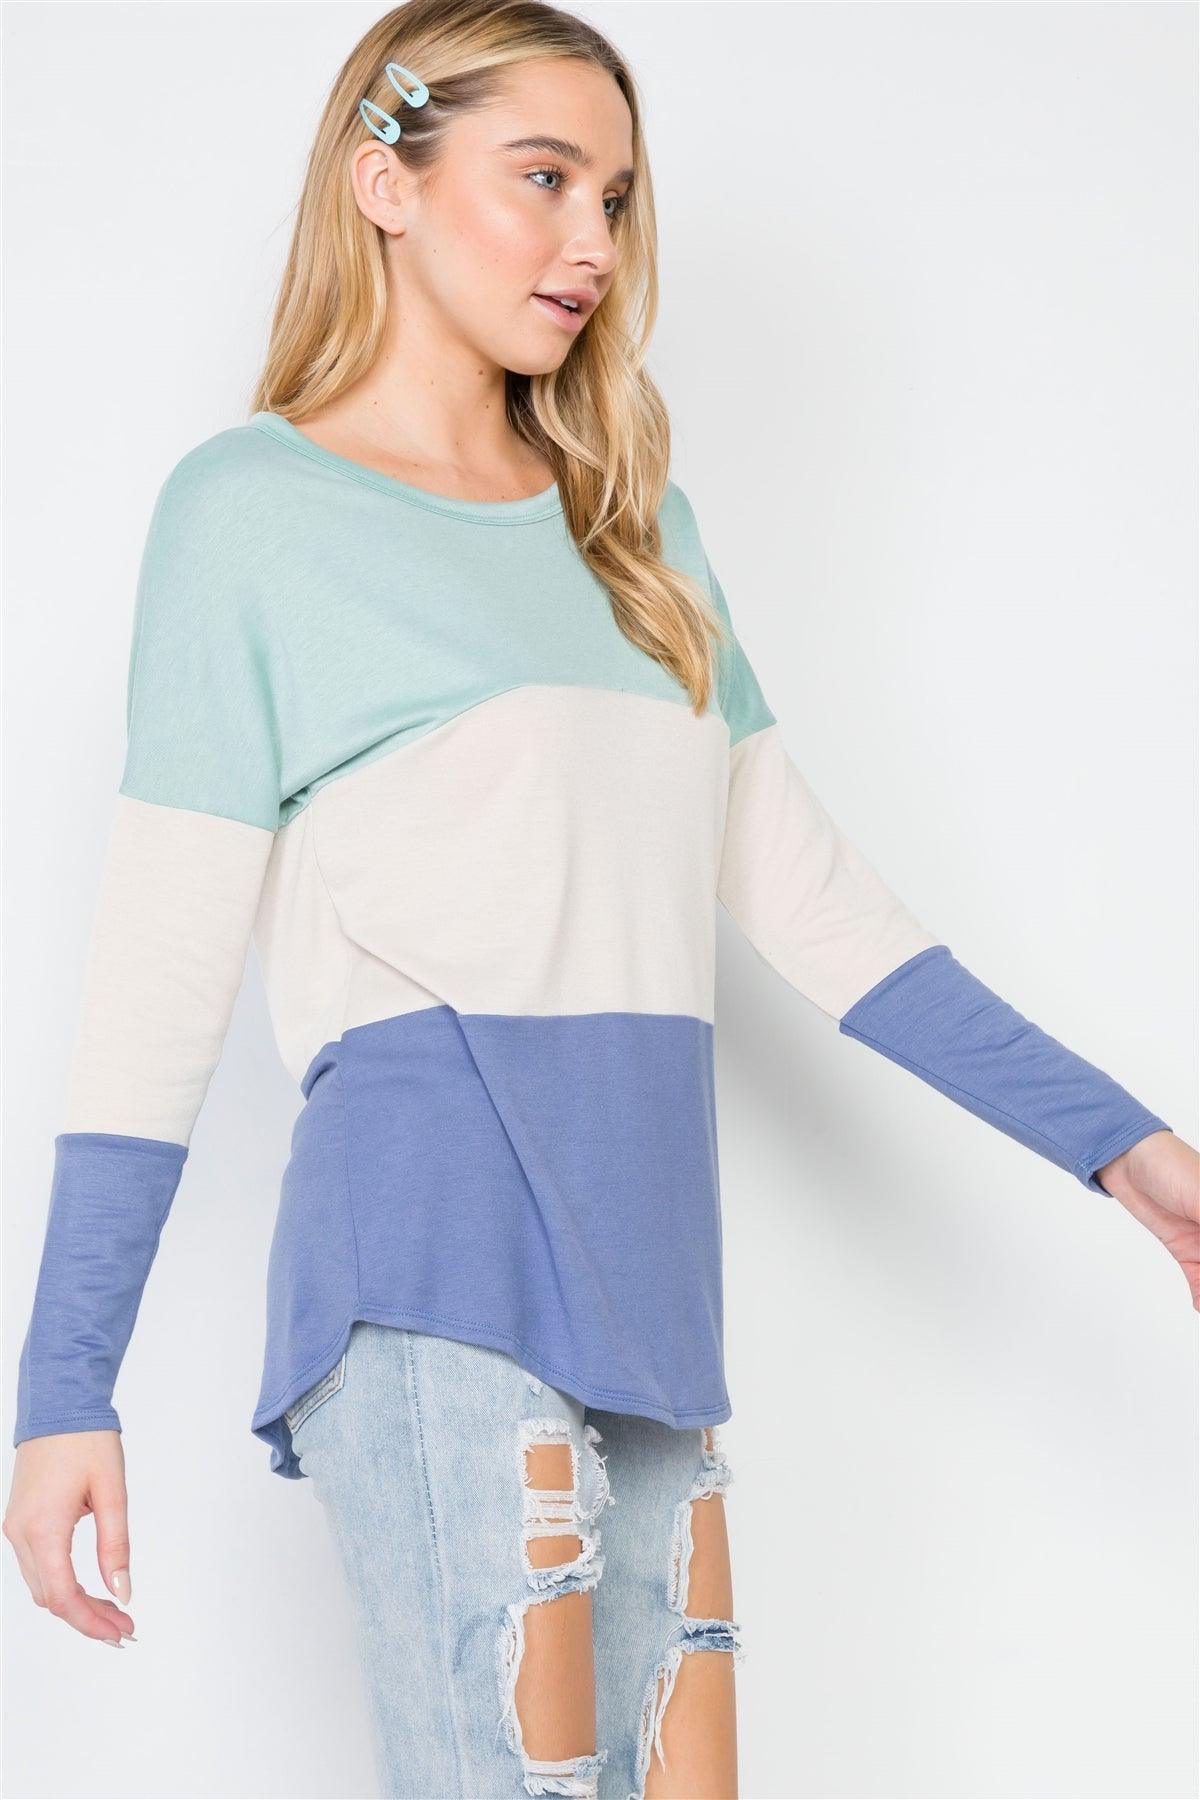 Multi Blue Colorblock Long Sleeve Sweater /2-2-2